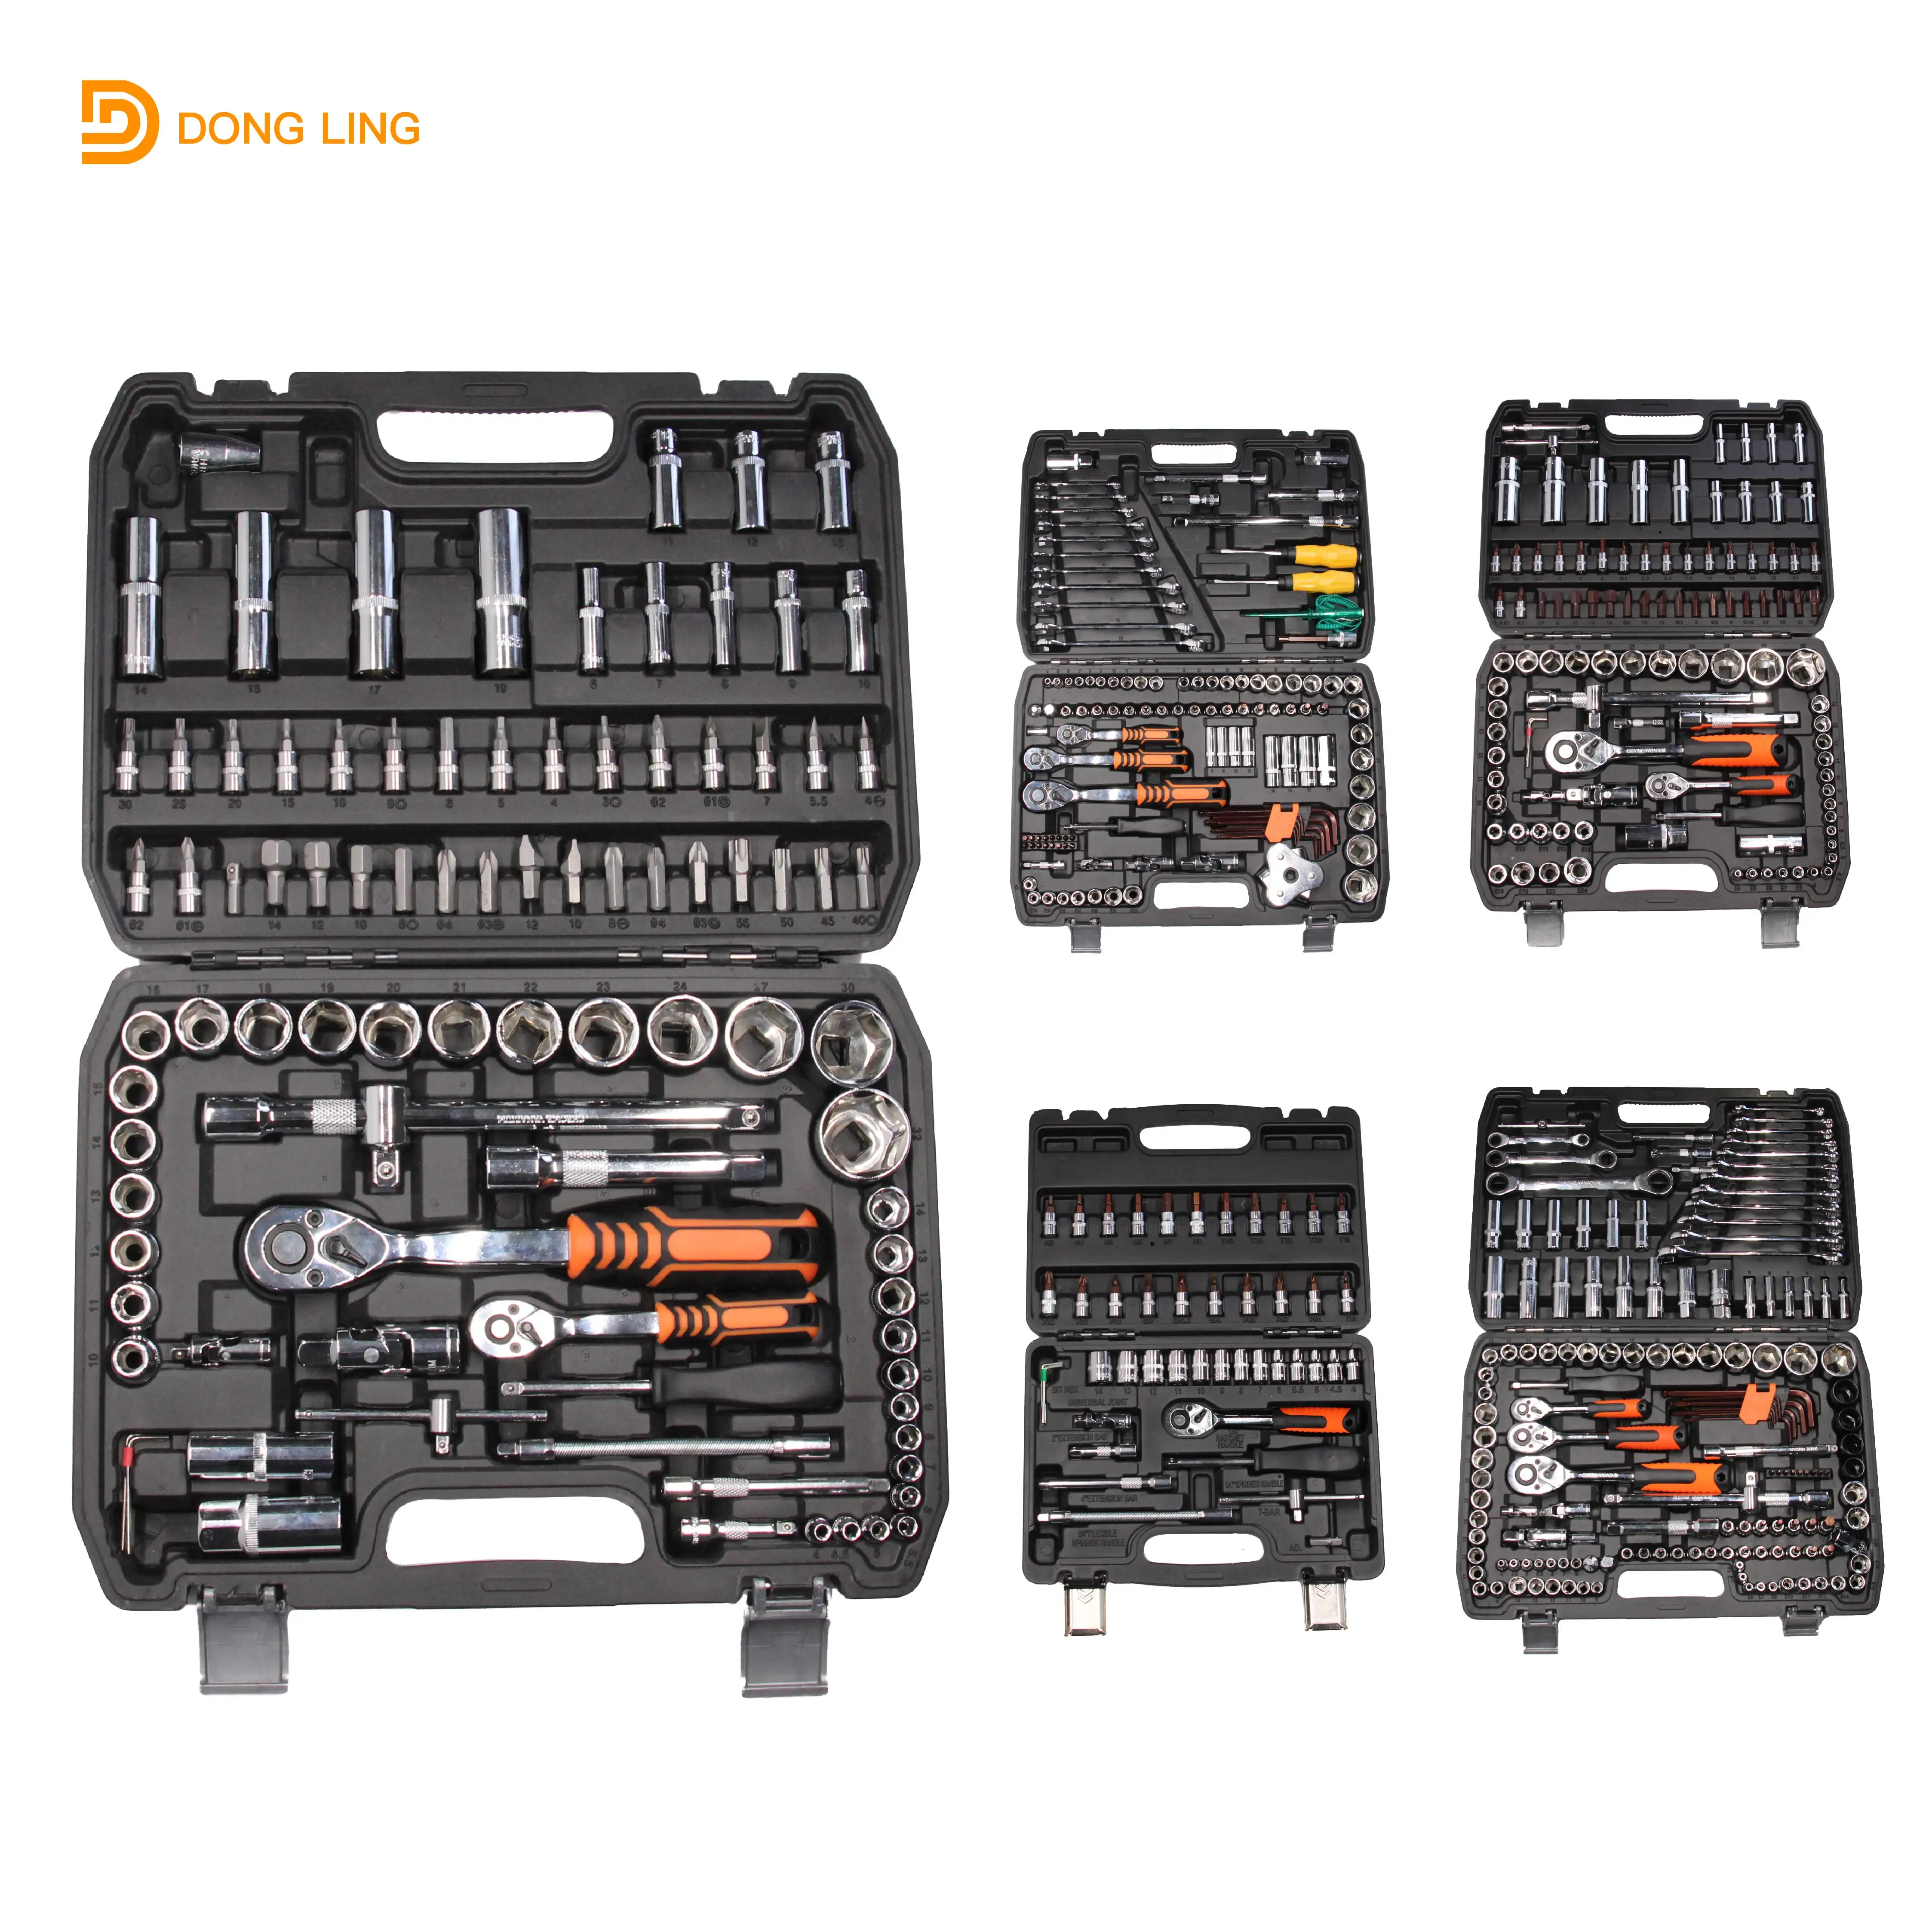 Donglink Tools in voller Größe anpassbare Hardware Box Tool Kitimpact Socket Set